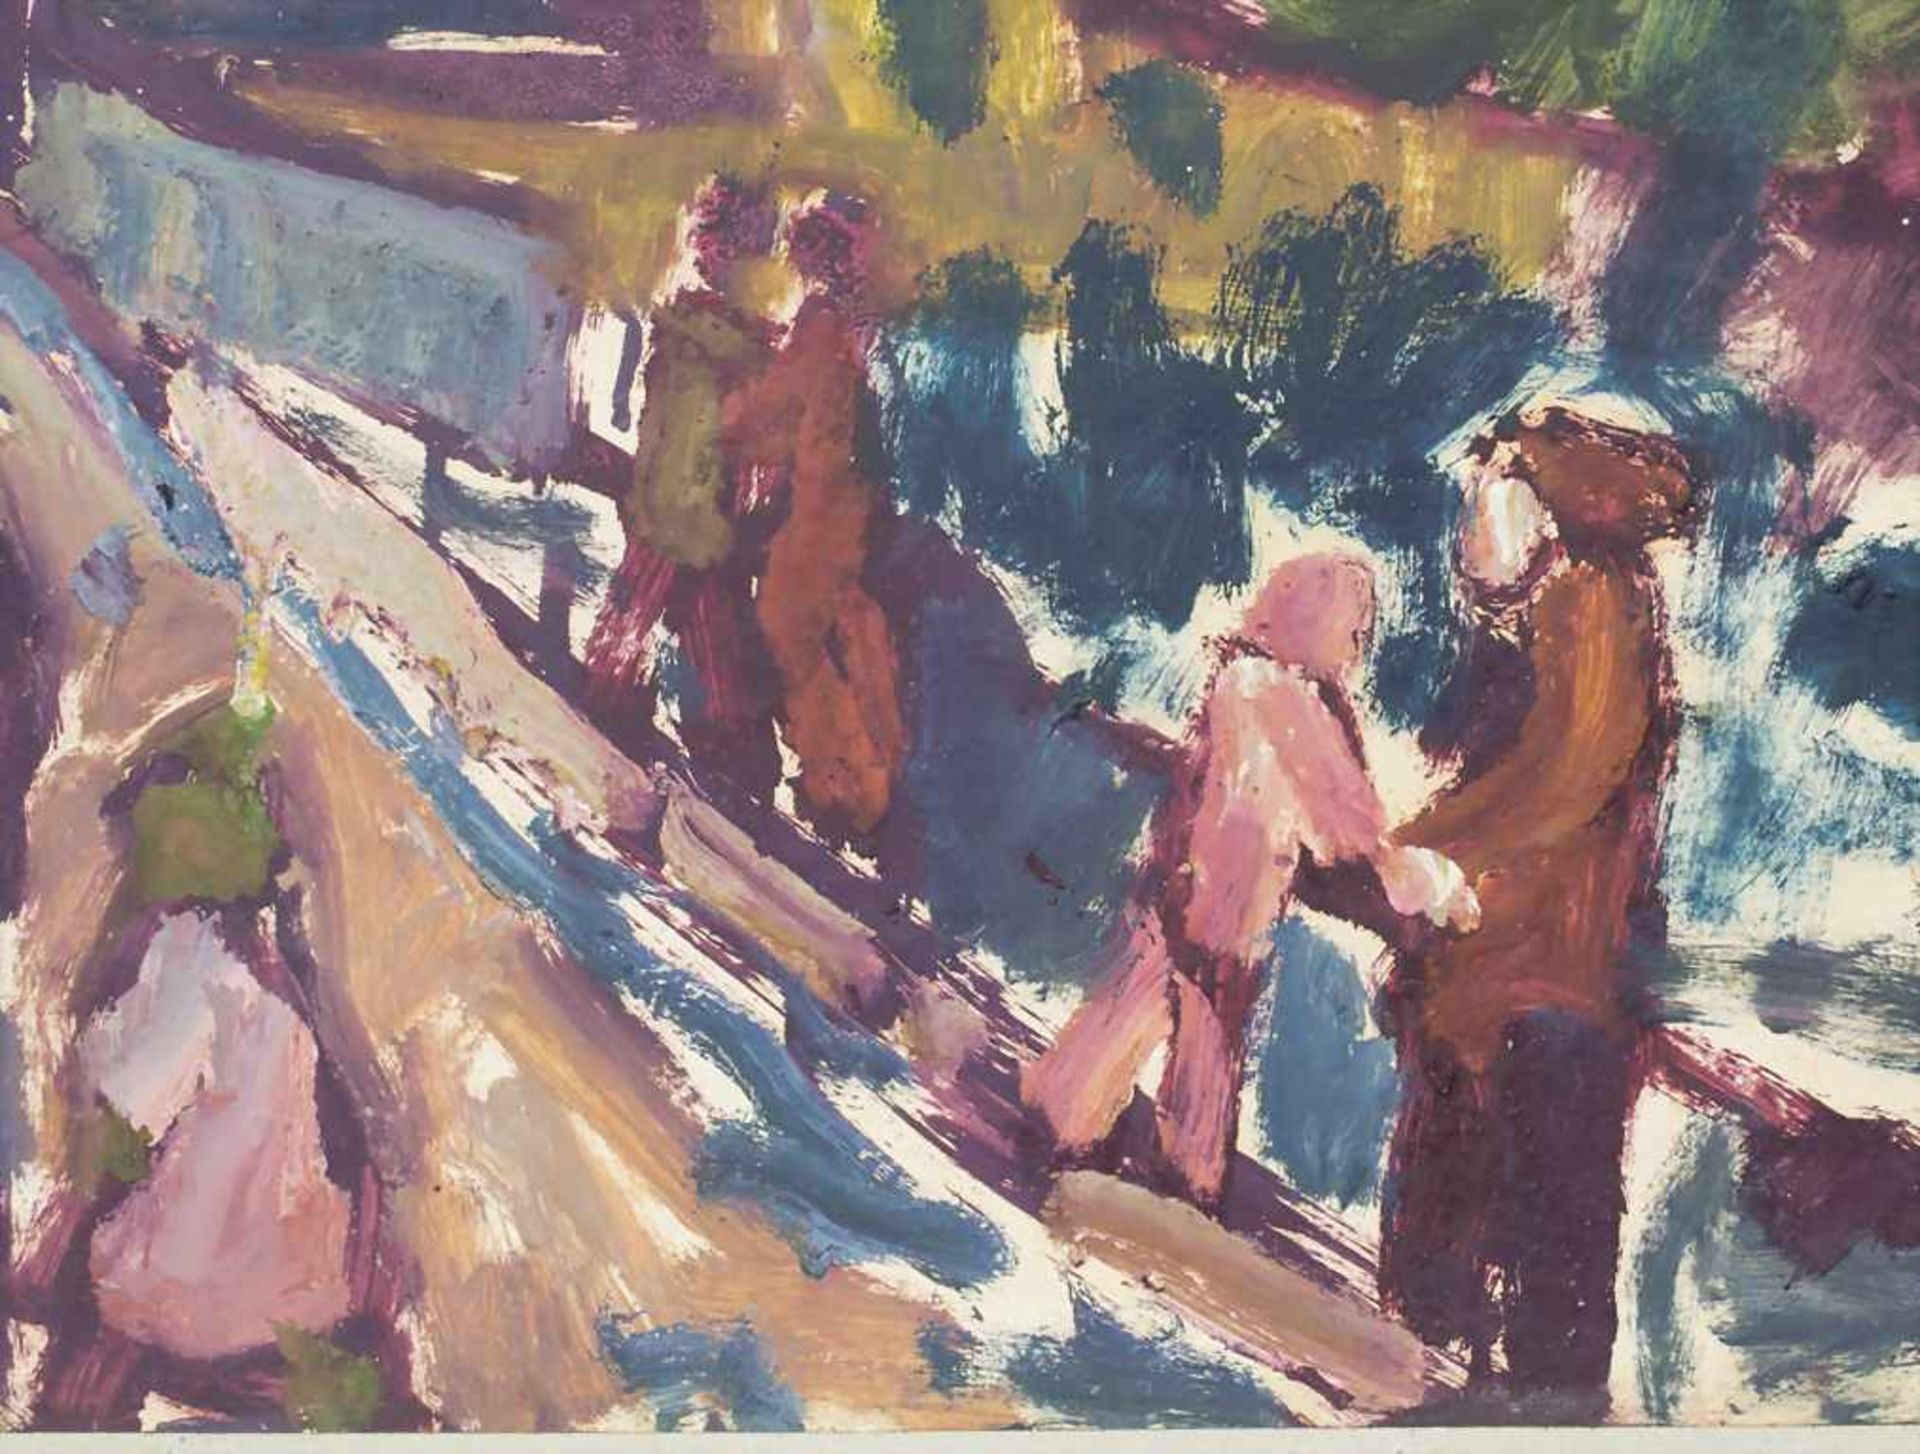 Miklos Németh (1934-2012), 'Straßenszene mit Spaziergängern' / 'A street scenery with walkers' - Image 3 of 3